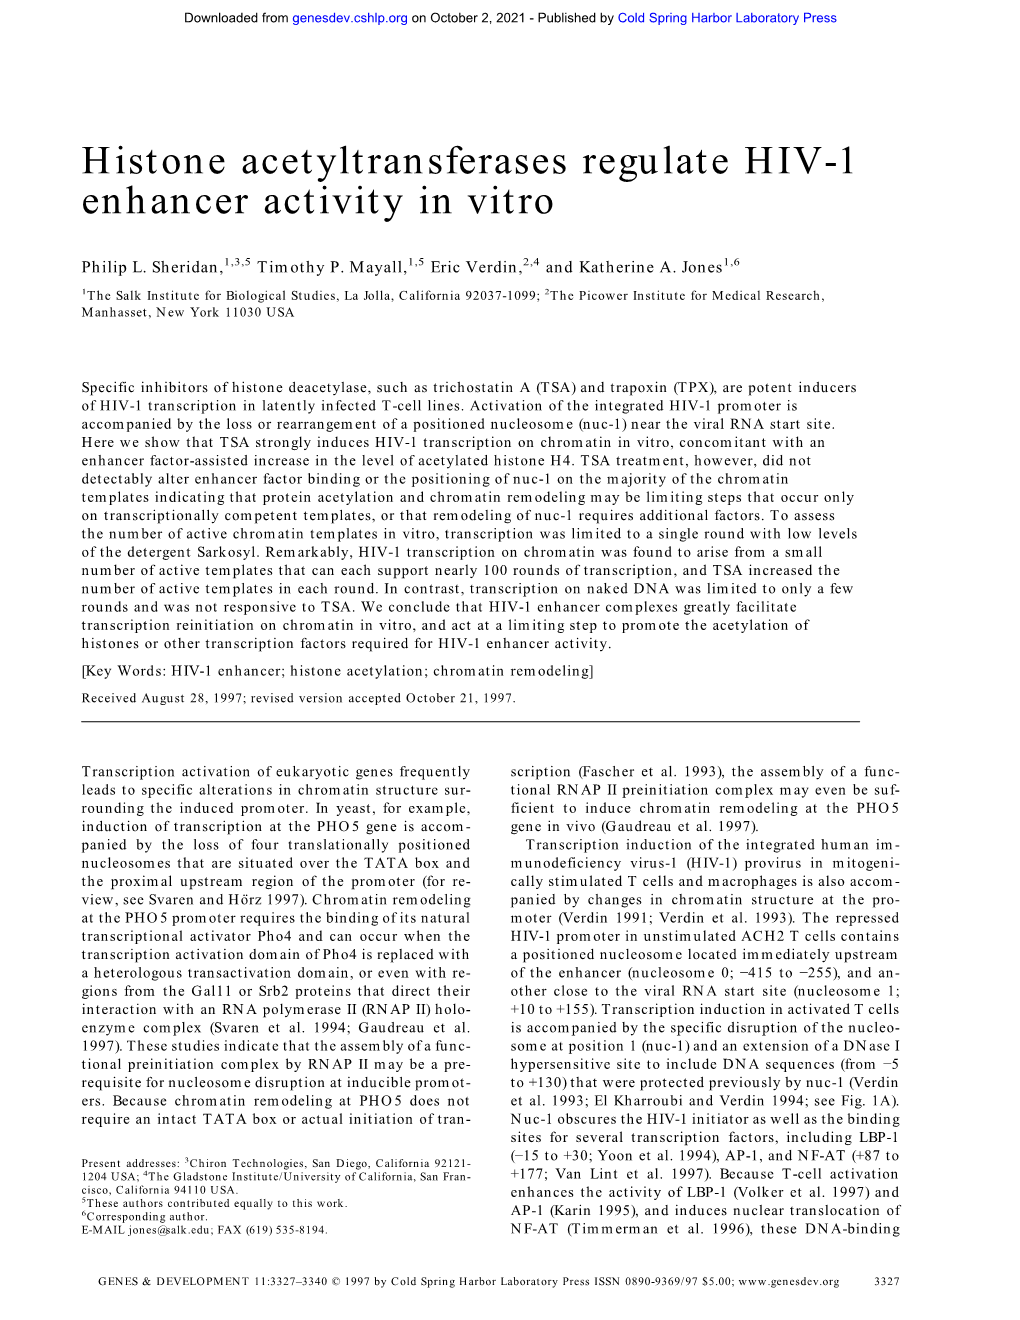 Histone Acetyltransferases Regulate HIV-1 Enhancer Activity in Vitro